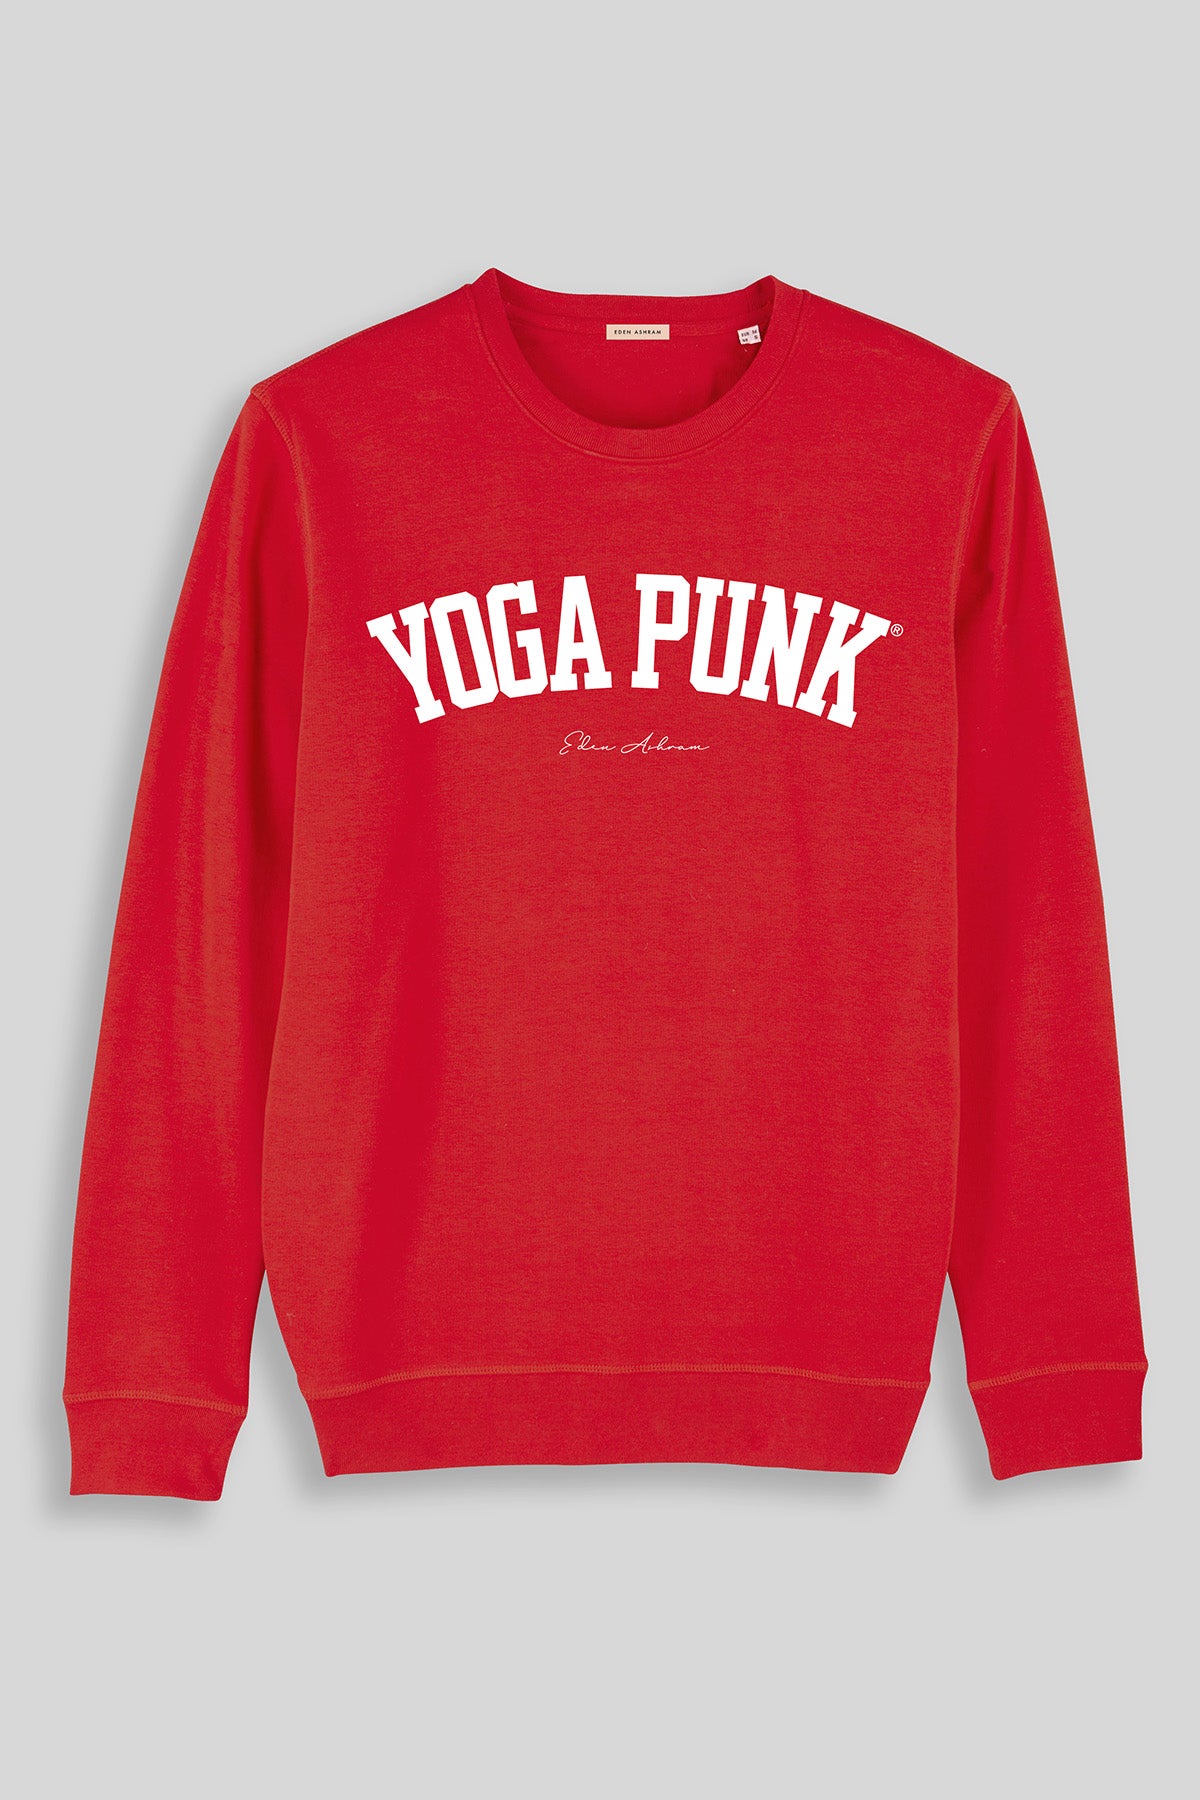 EDEN ASHRAM Yoga Punk Varsity Organic Sweatshirt - Red